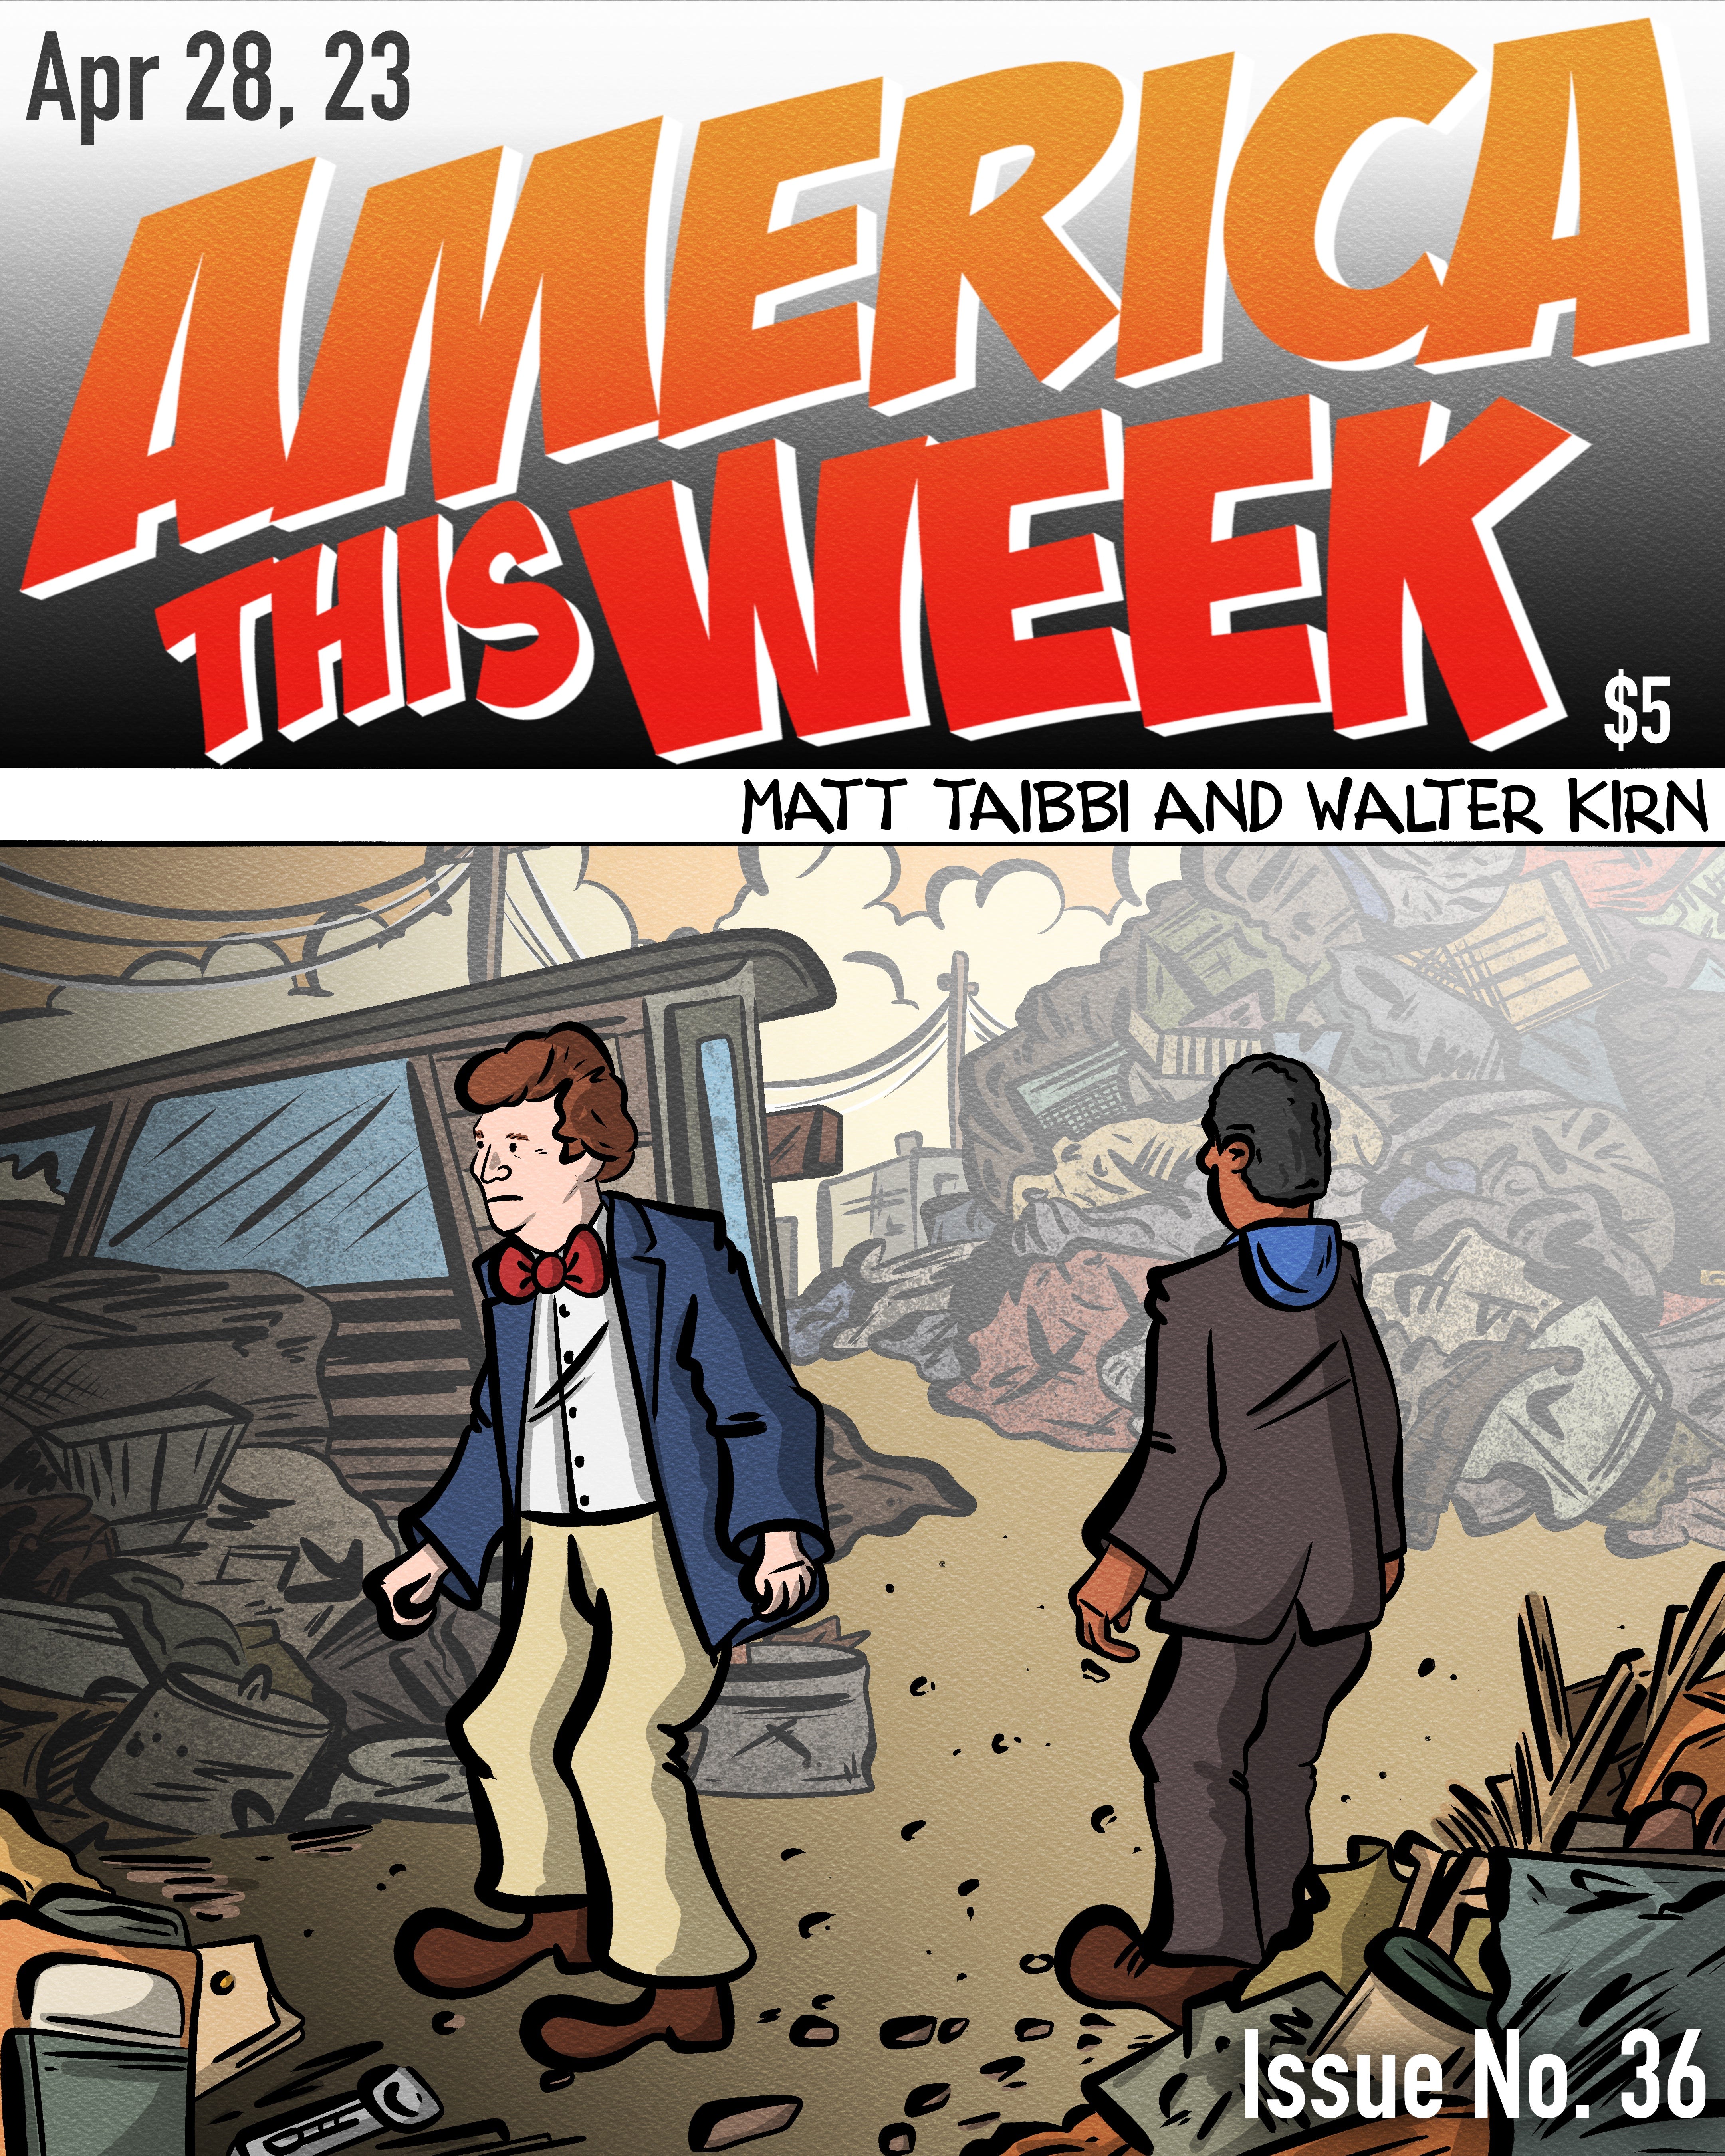 Episode 36: ”America This Week,” with Matt Taibbi and Walter Kirn